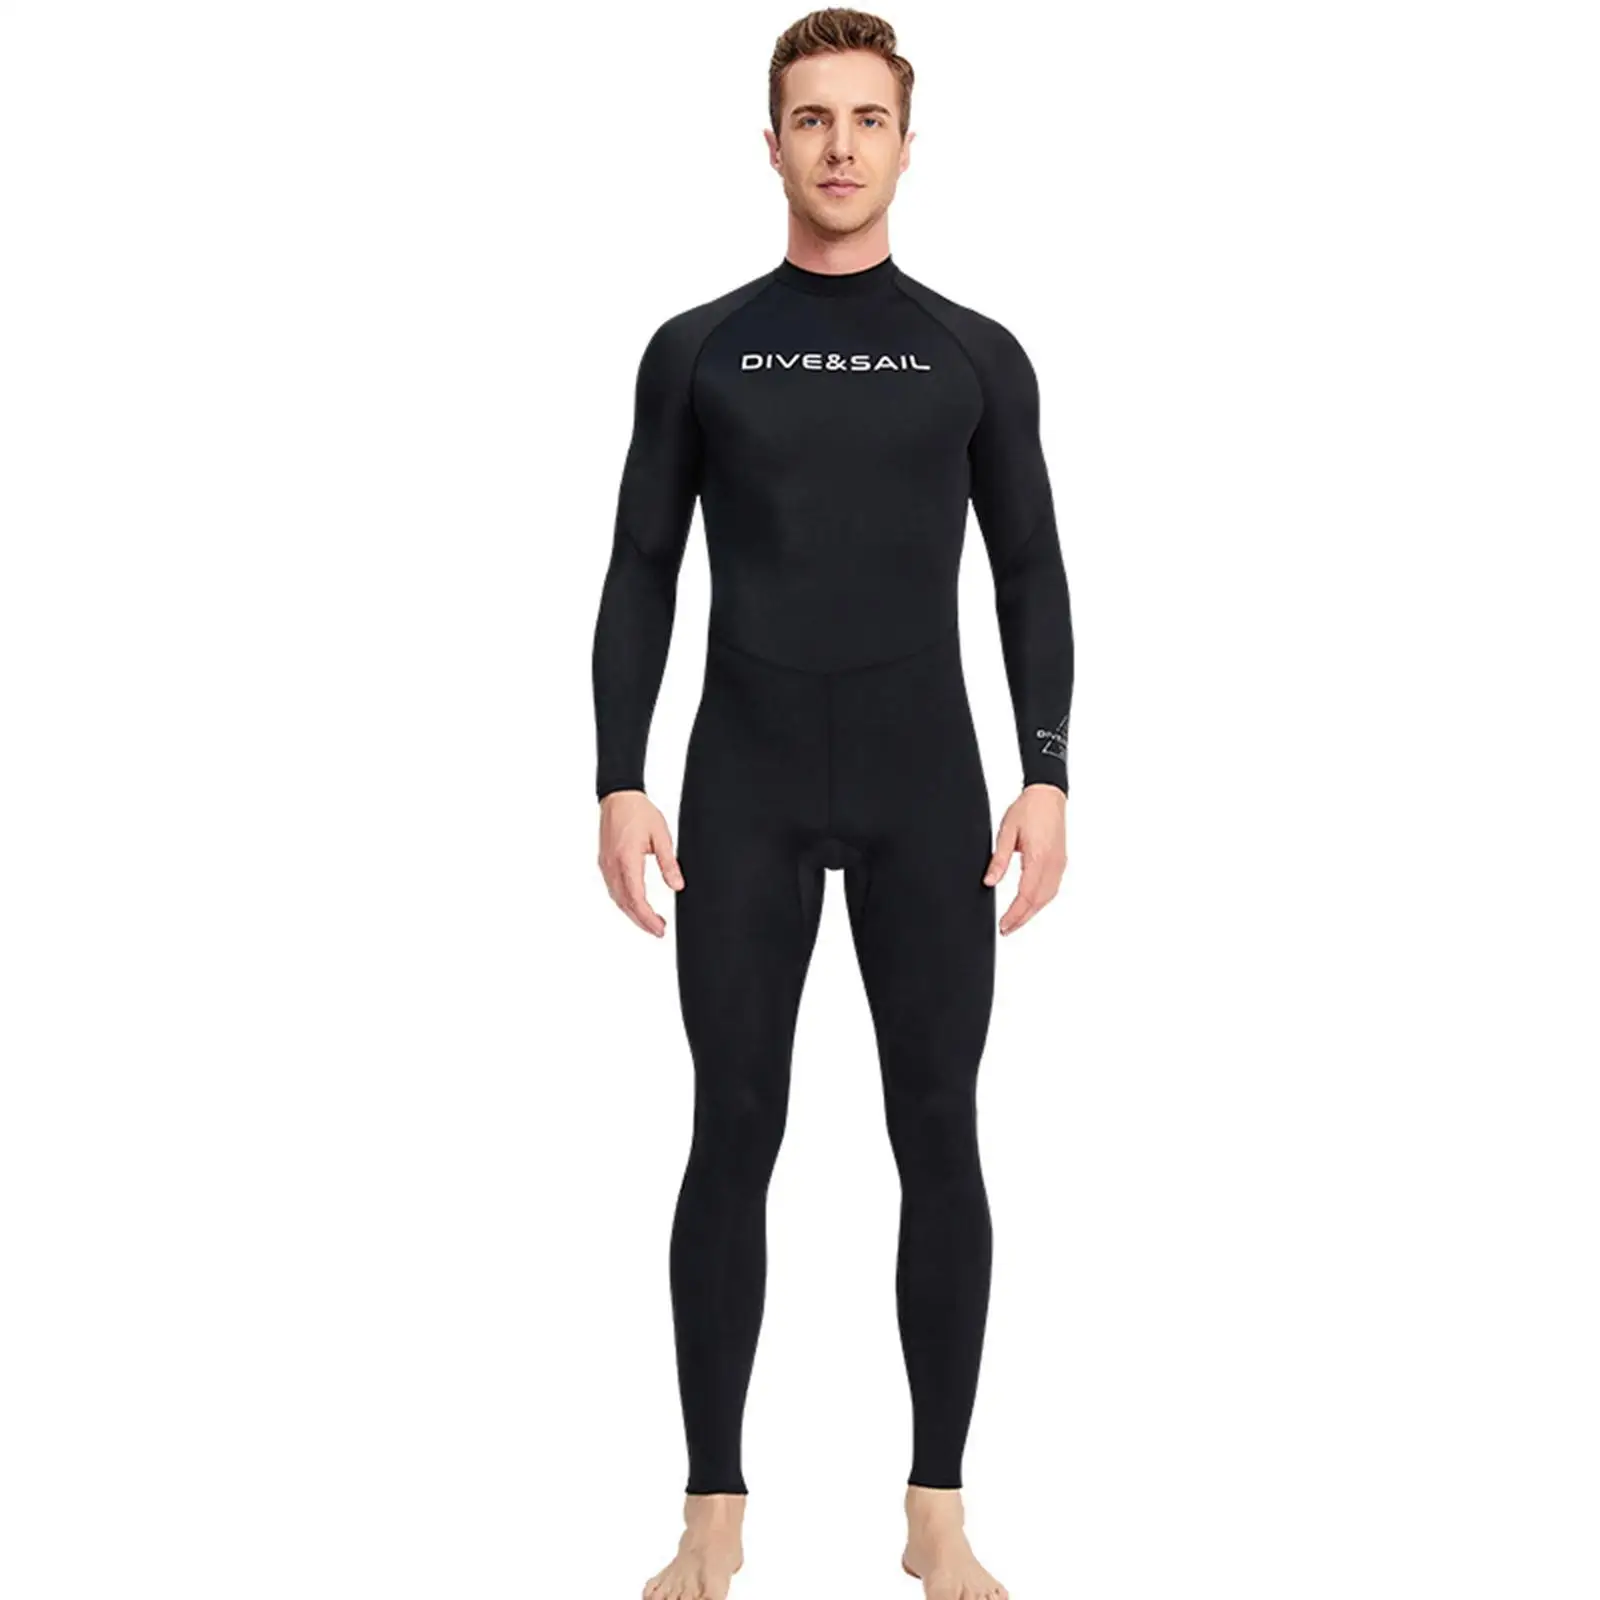 Women Men Wetsuit, Back Zip Full  Piece Diving Suit, for Snorkeling, Scuba